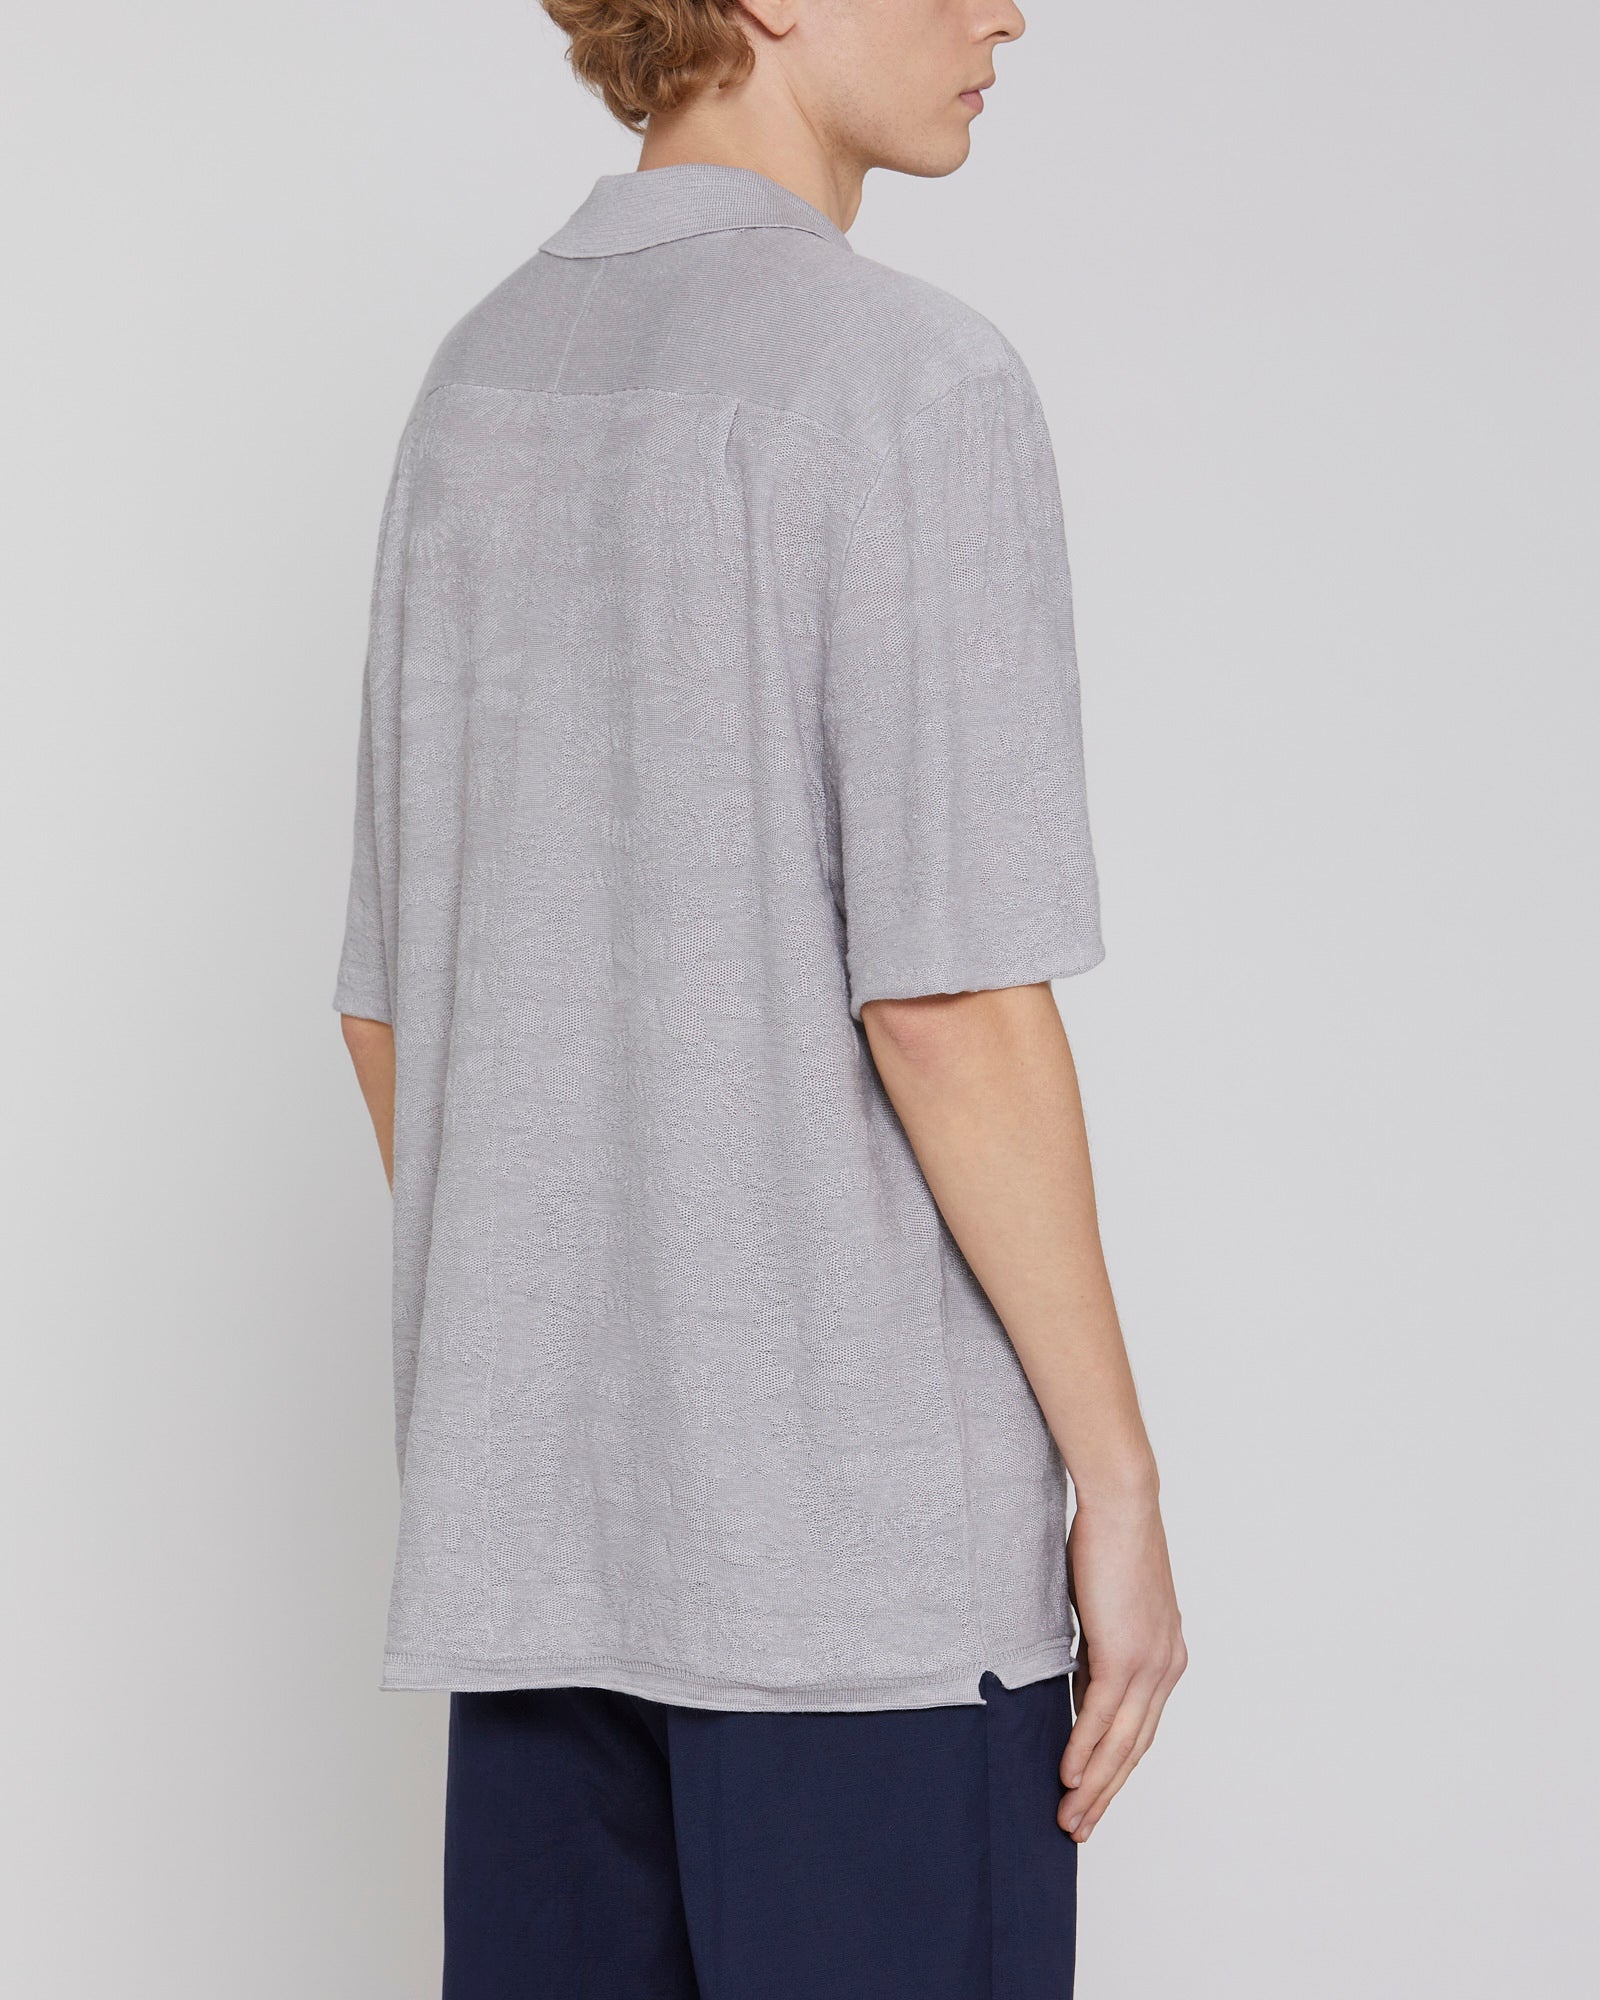 Shirt collar in knit fabric grey